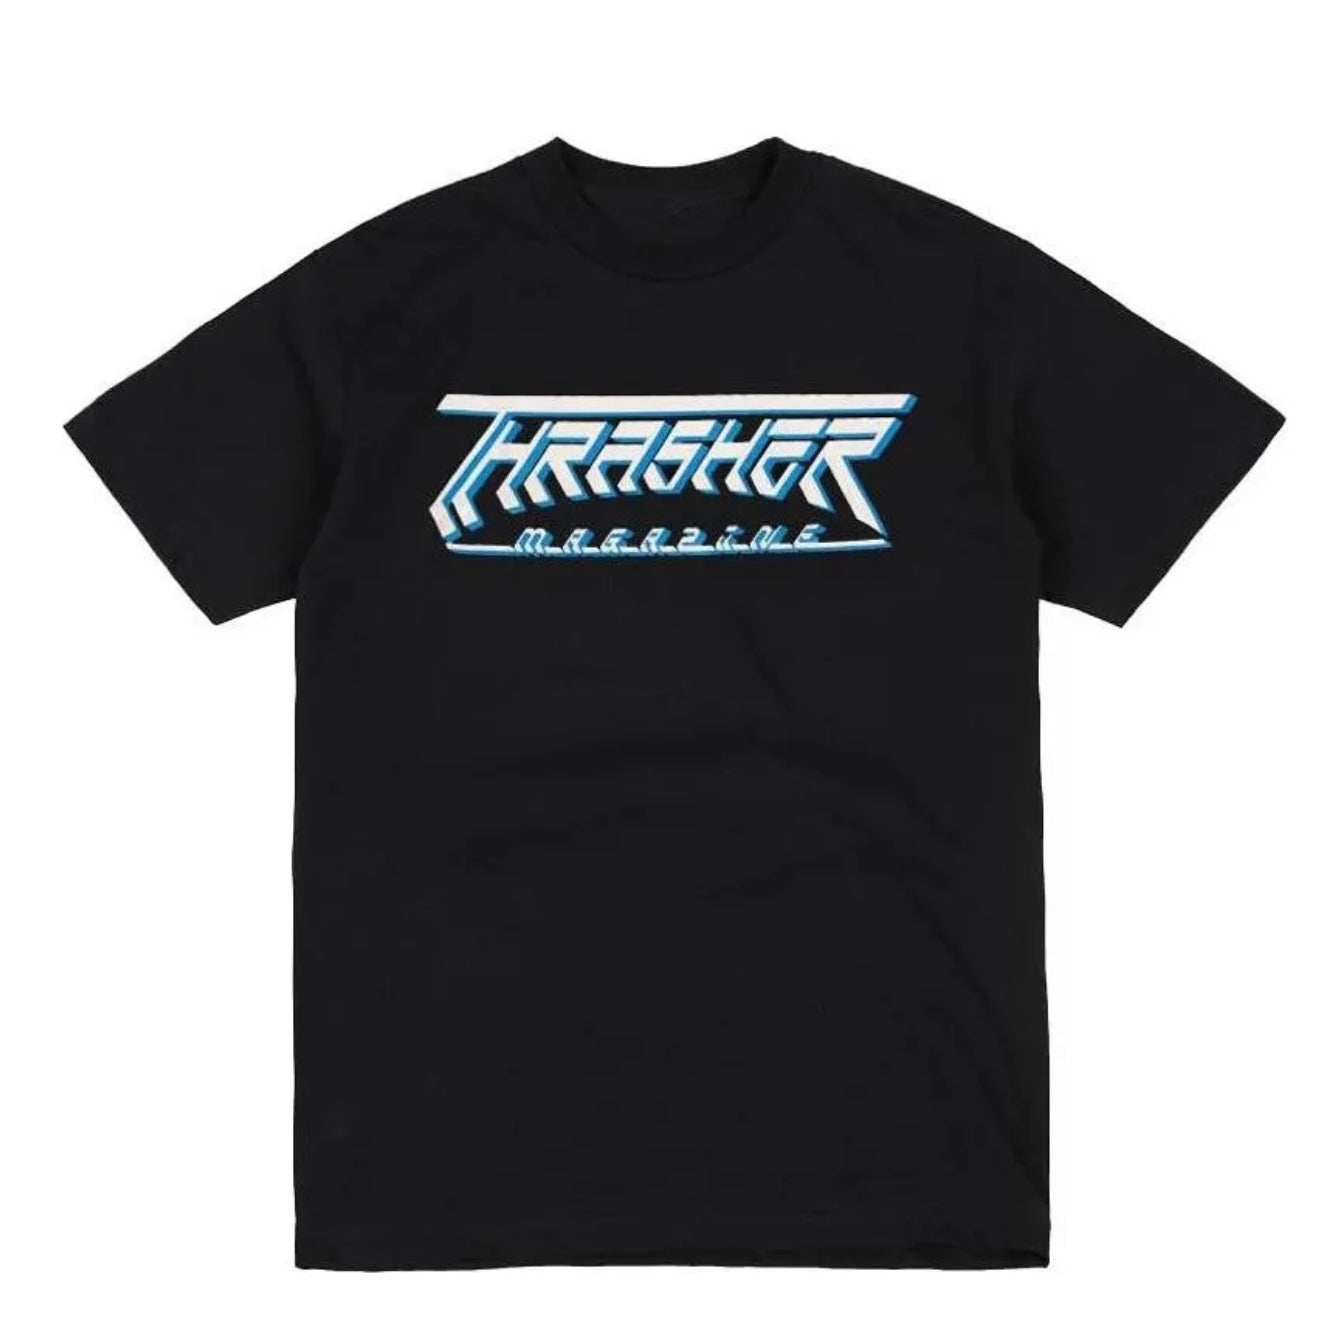 THRASHER future logo t-shirt